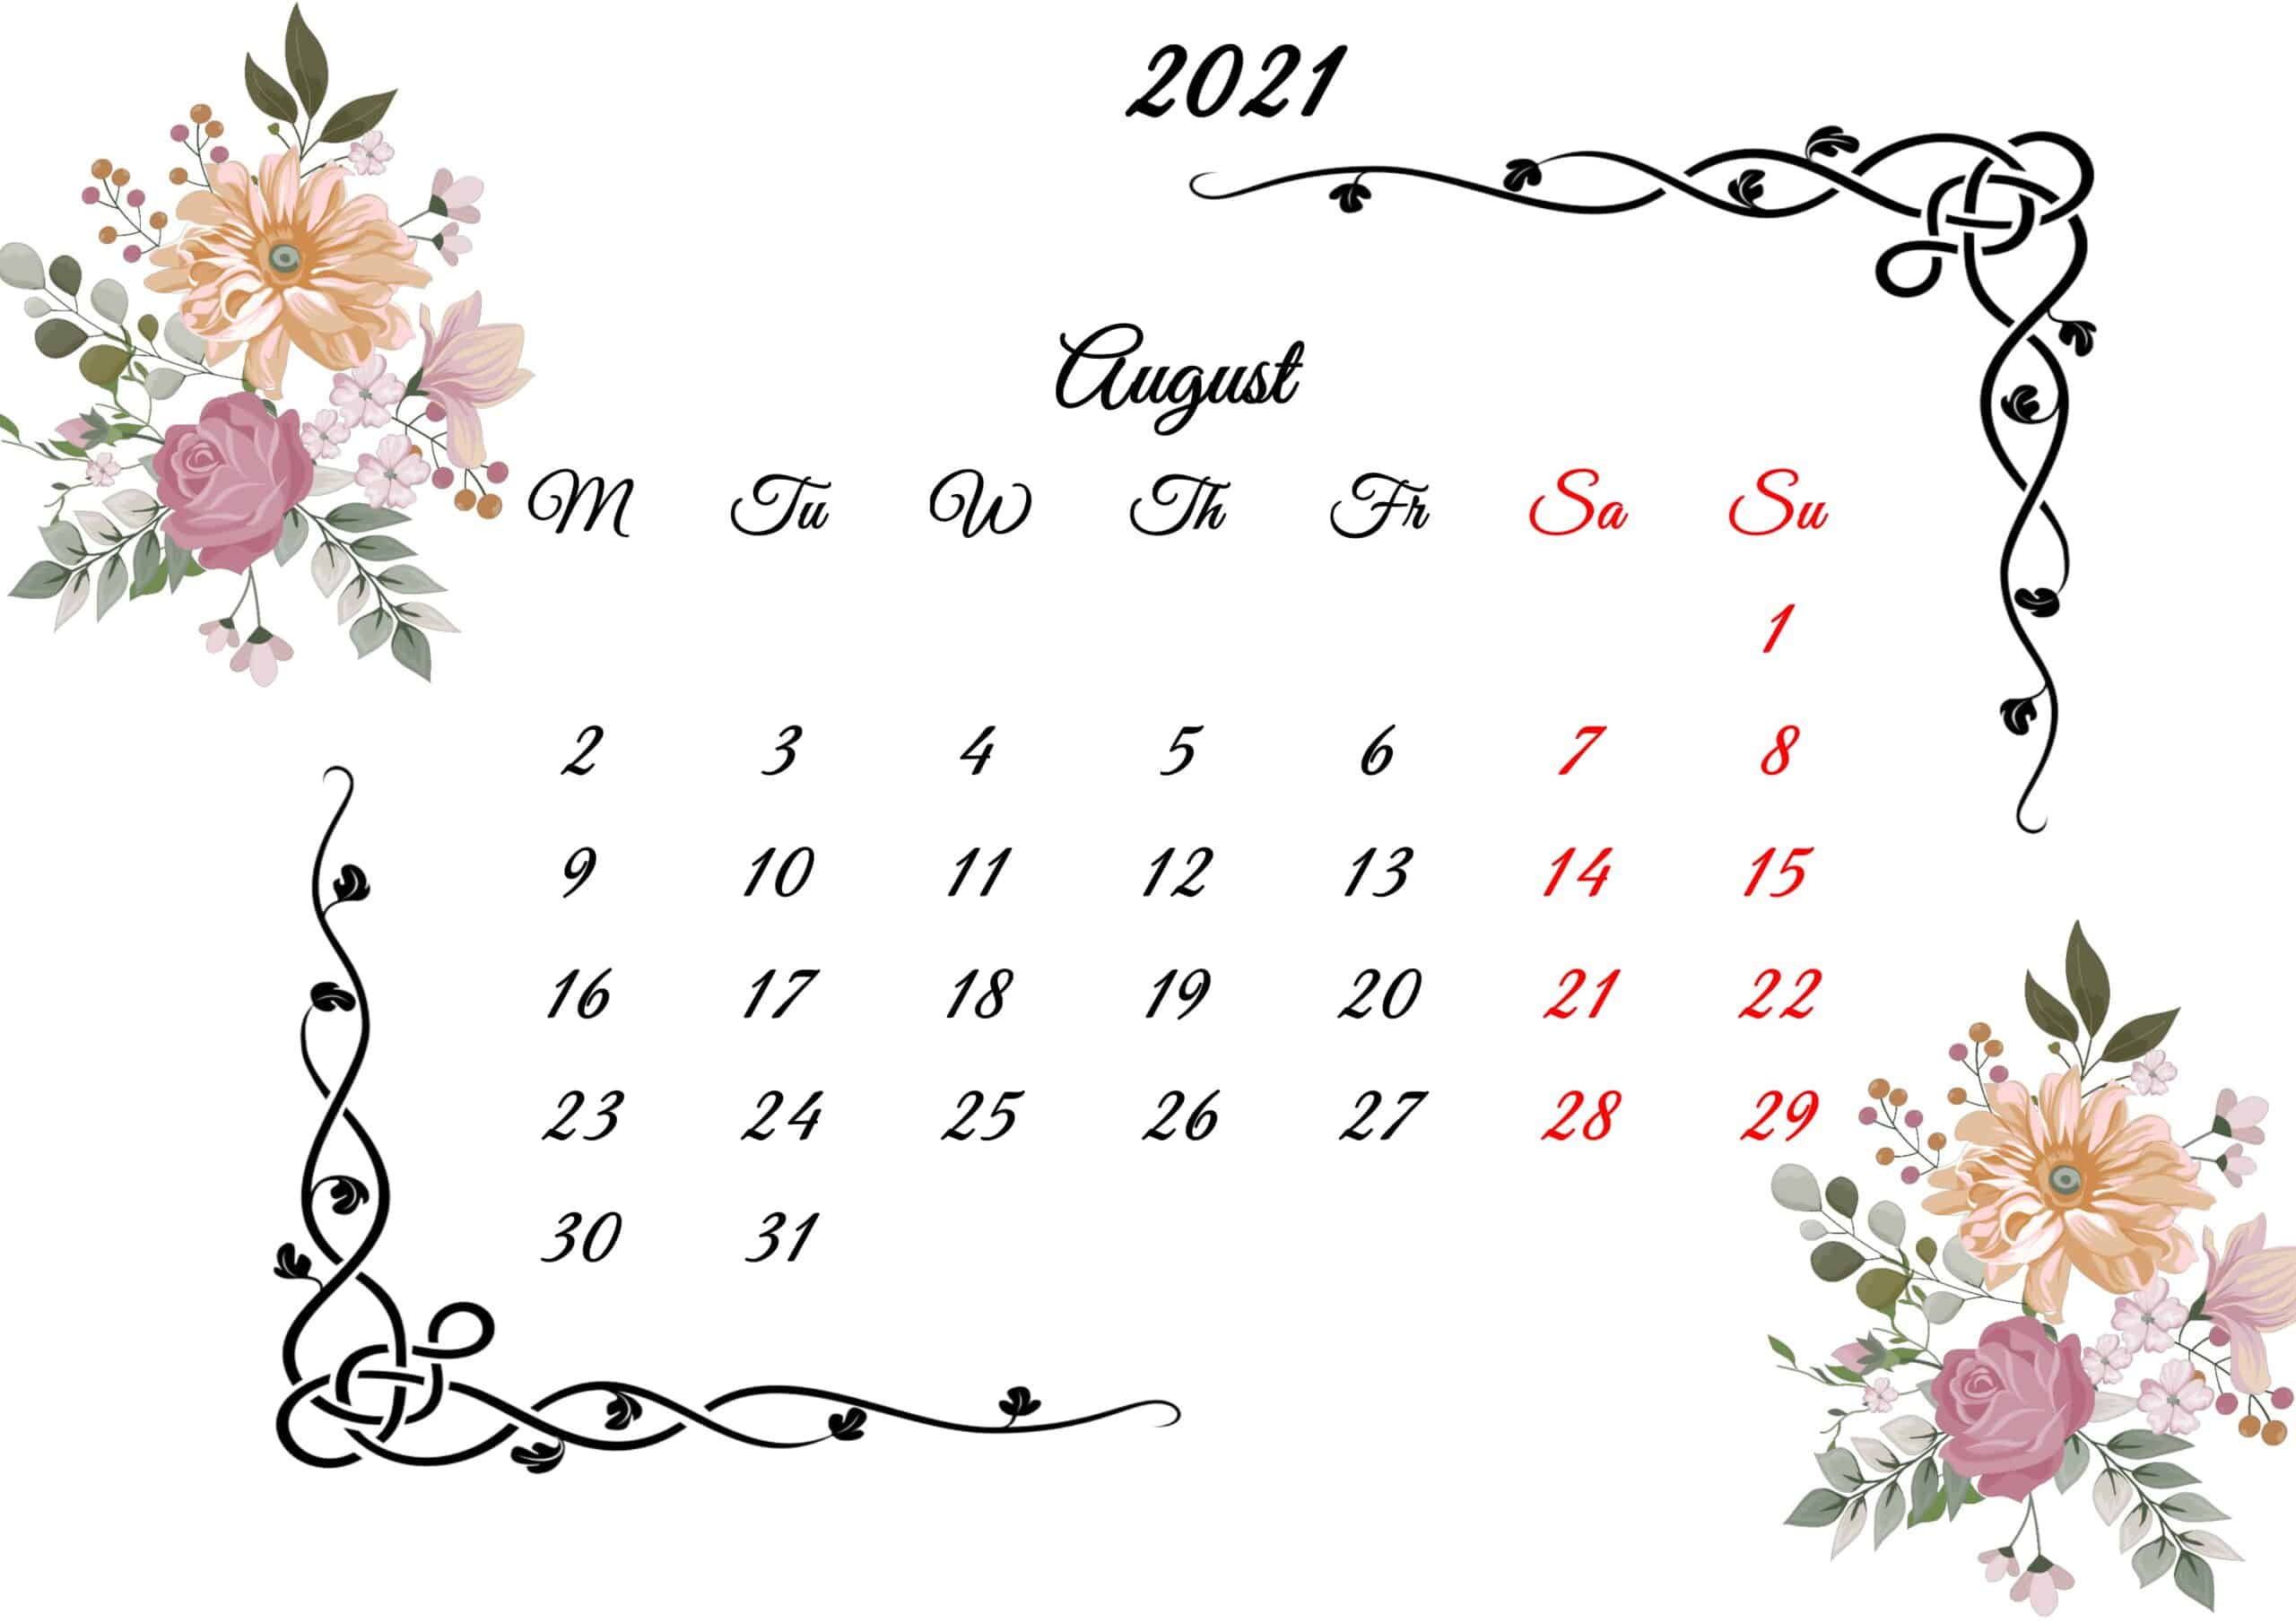 August Calendar 2021 Printable